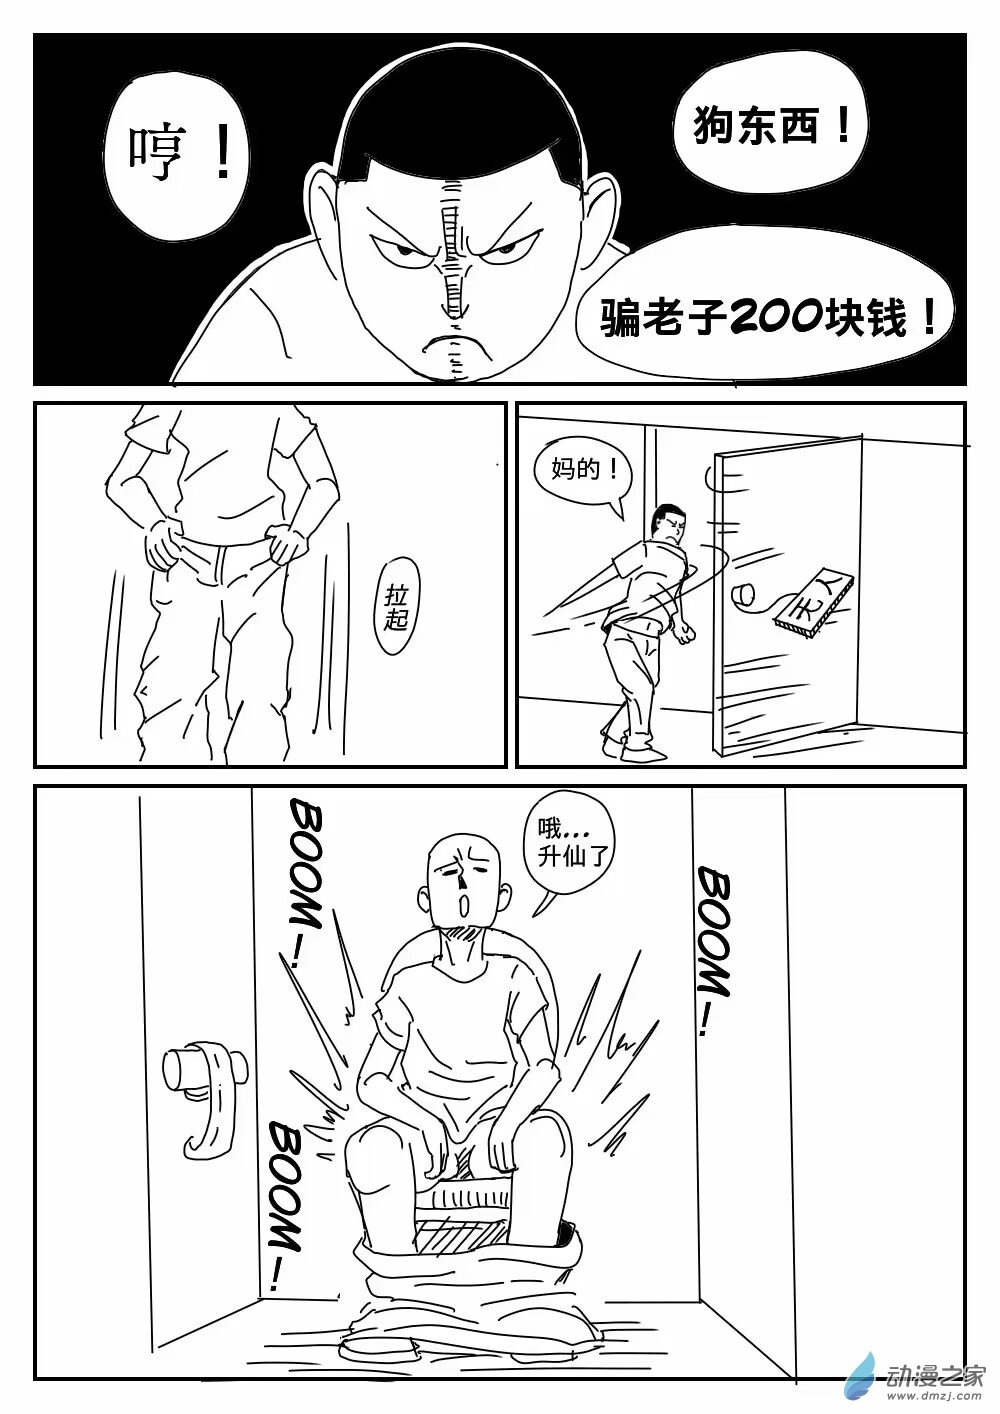 K神的短篇漫畫集 - 03 公廁 - 2